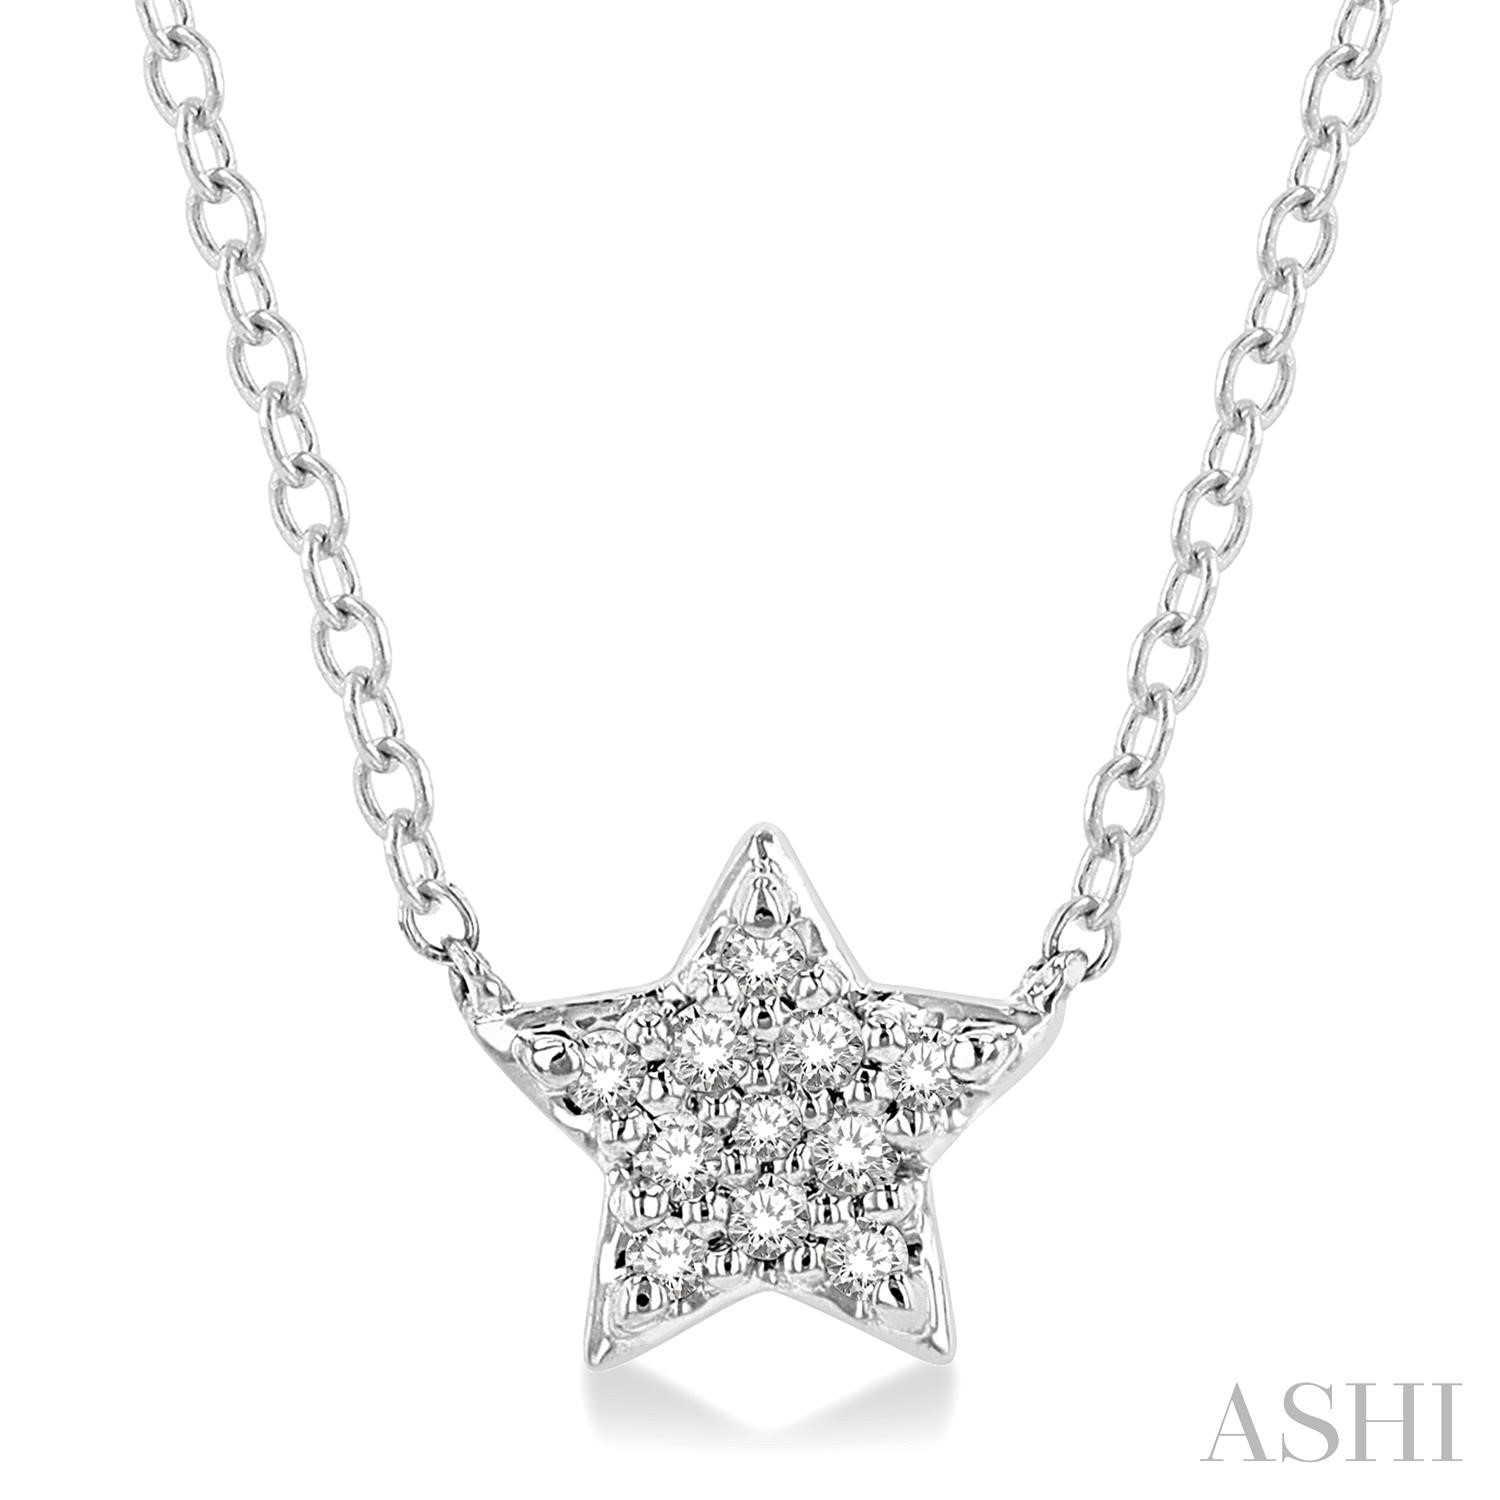 10 Karat White Gold Petite Star Diamond Fashion Pendant 0.08Ctw
18Inch Chain